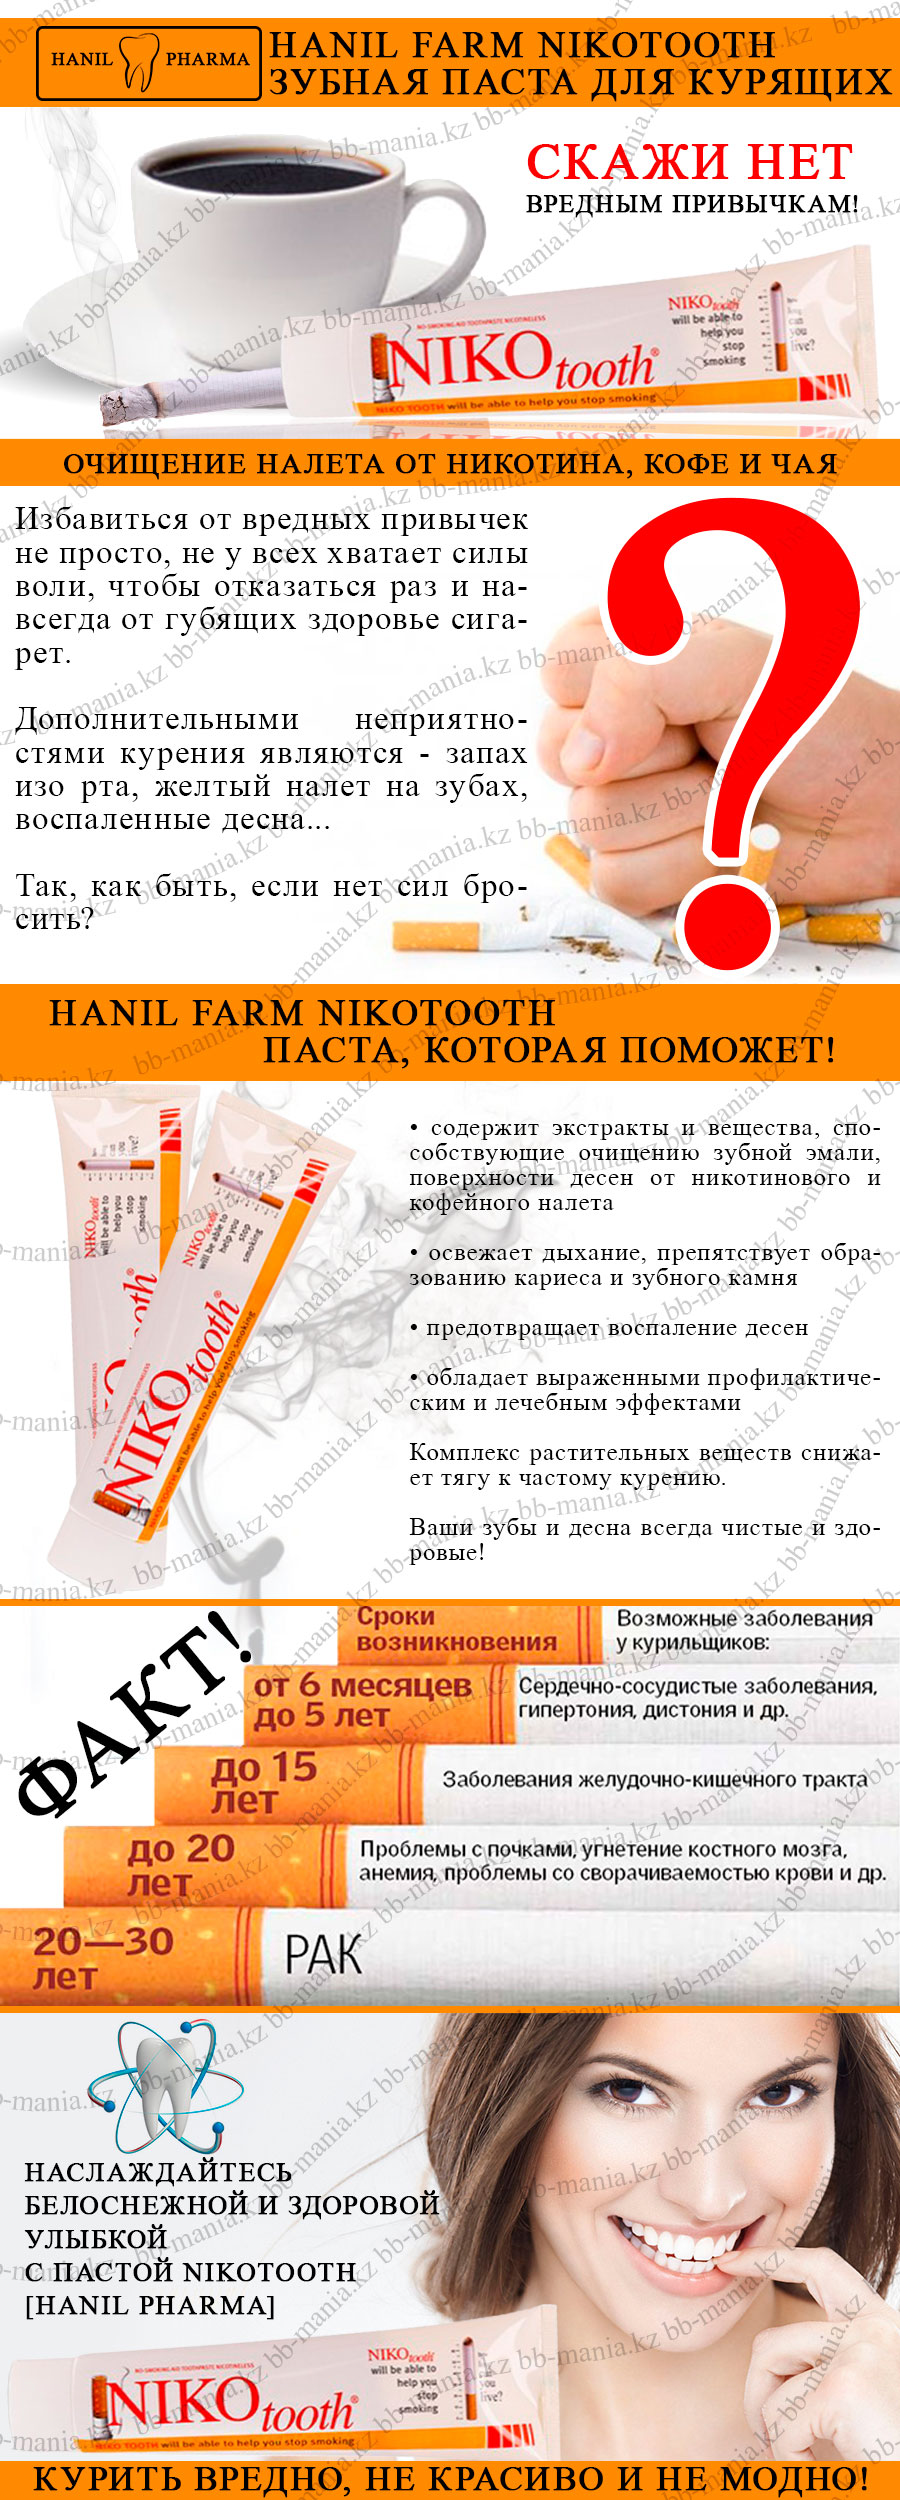 Nikotooth [Hanil Pharma]